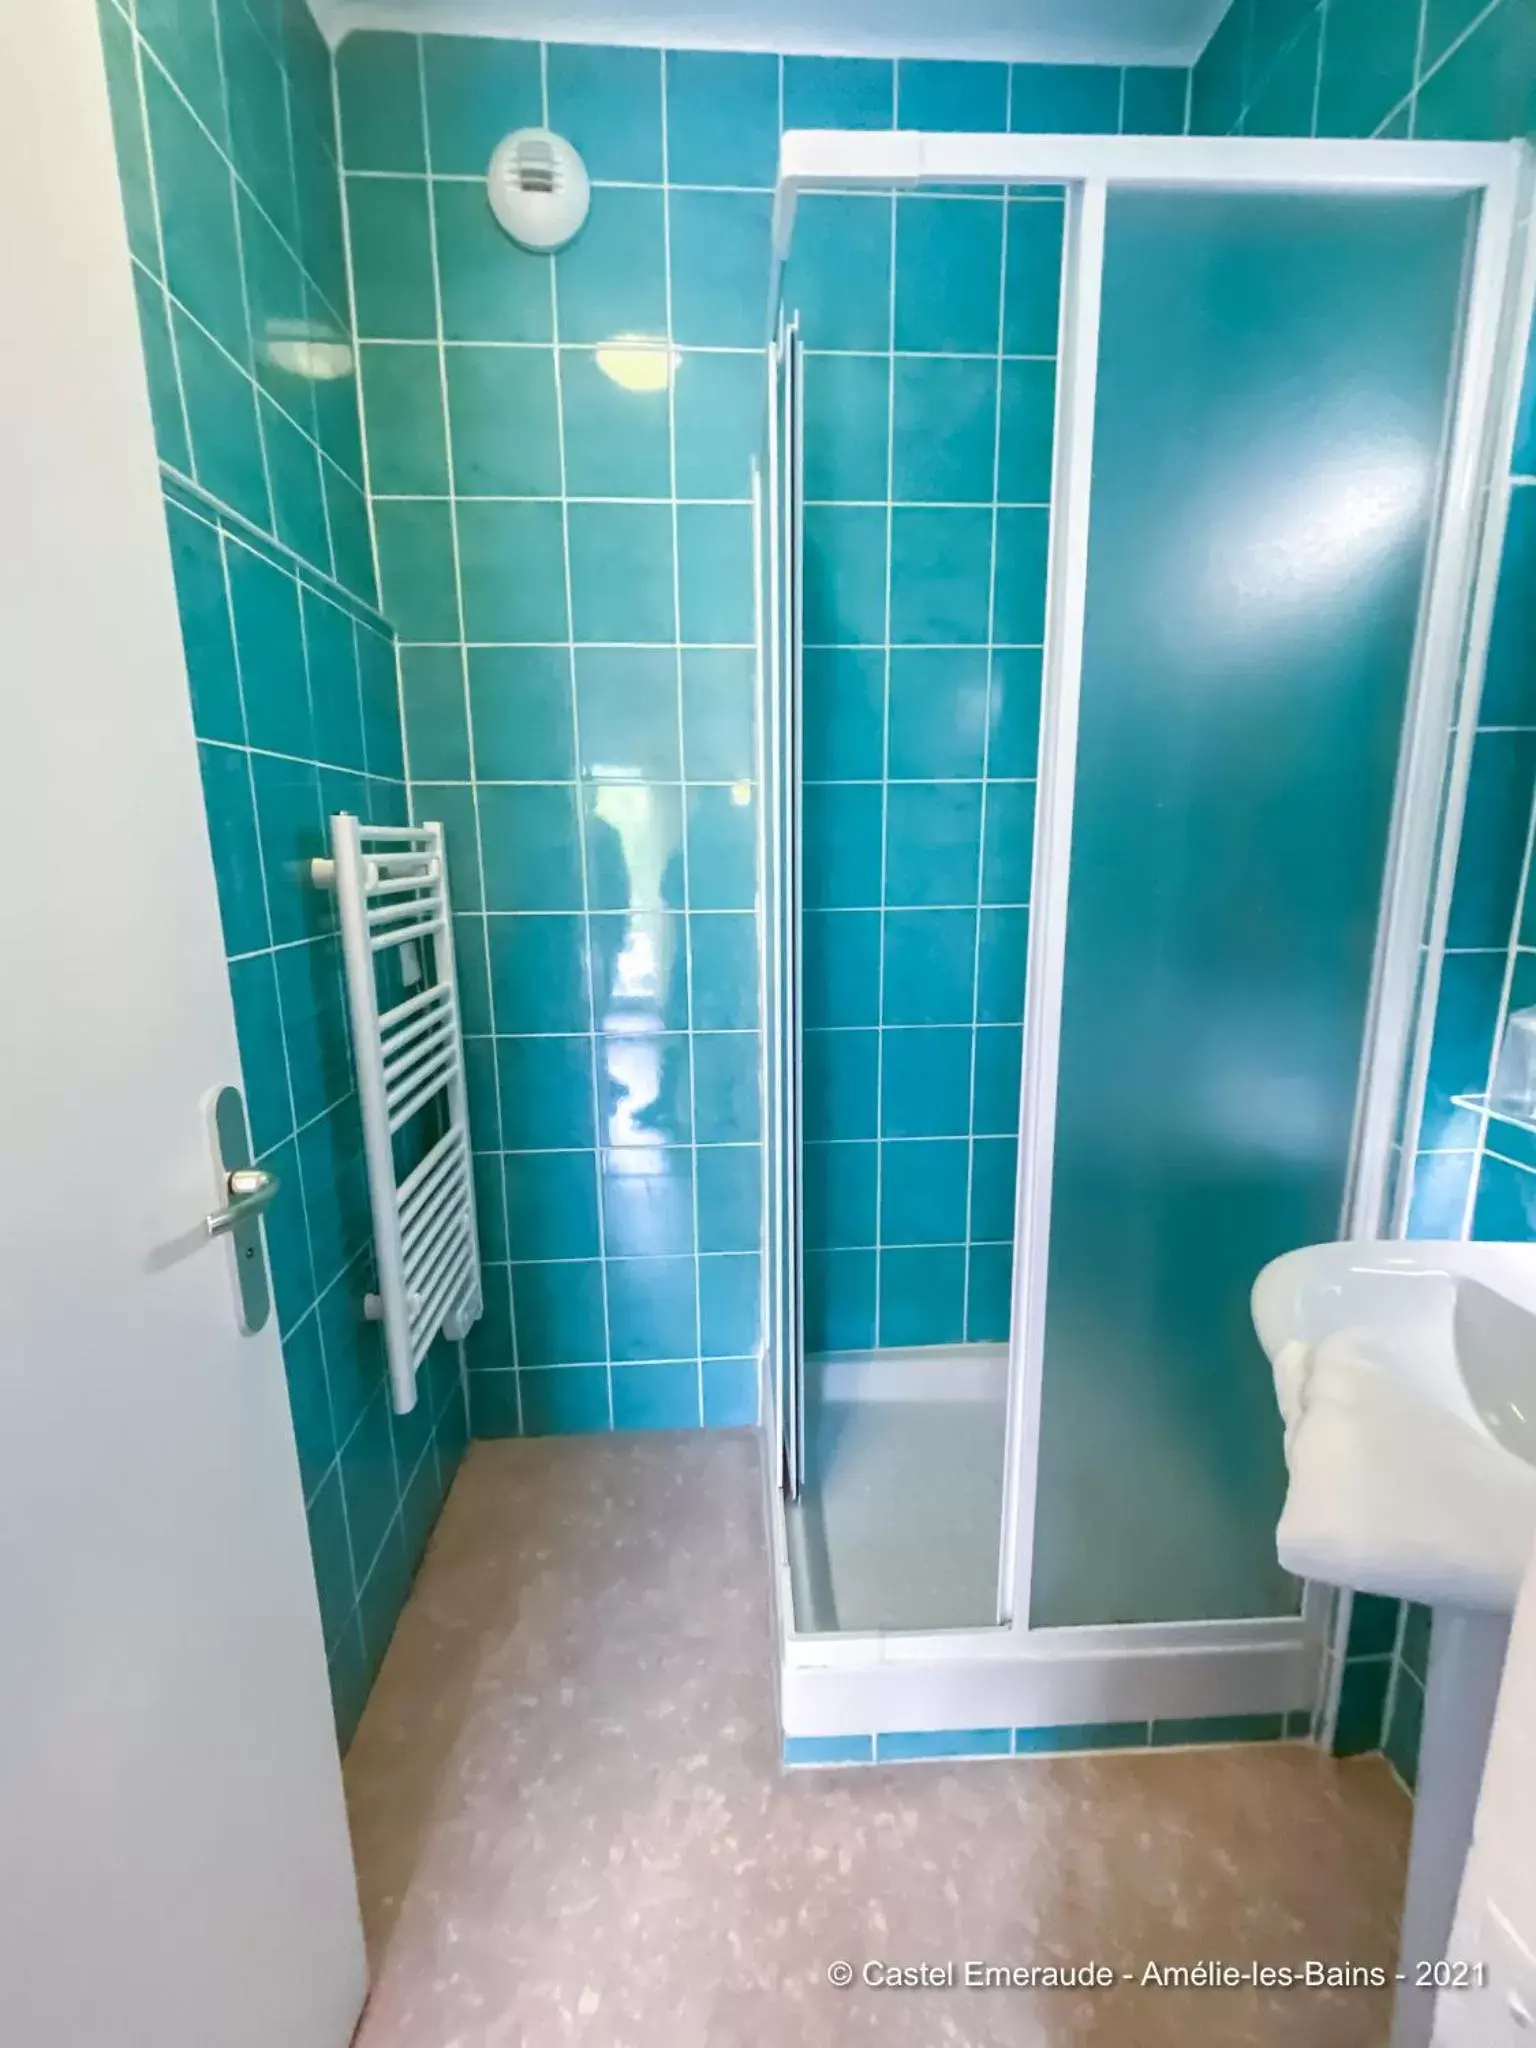 Bathroom in Appart'Hotel Castel Emeraude, Charme et Caractère